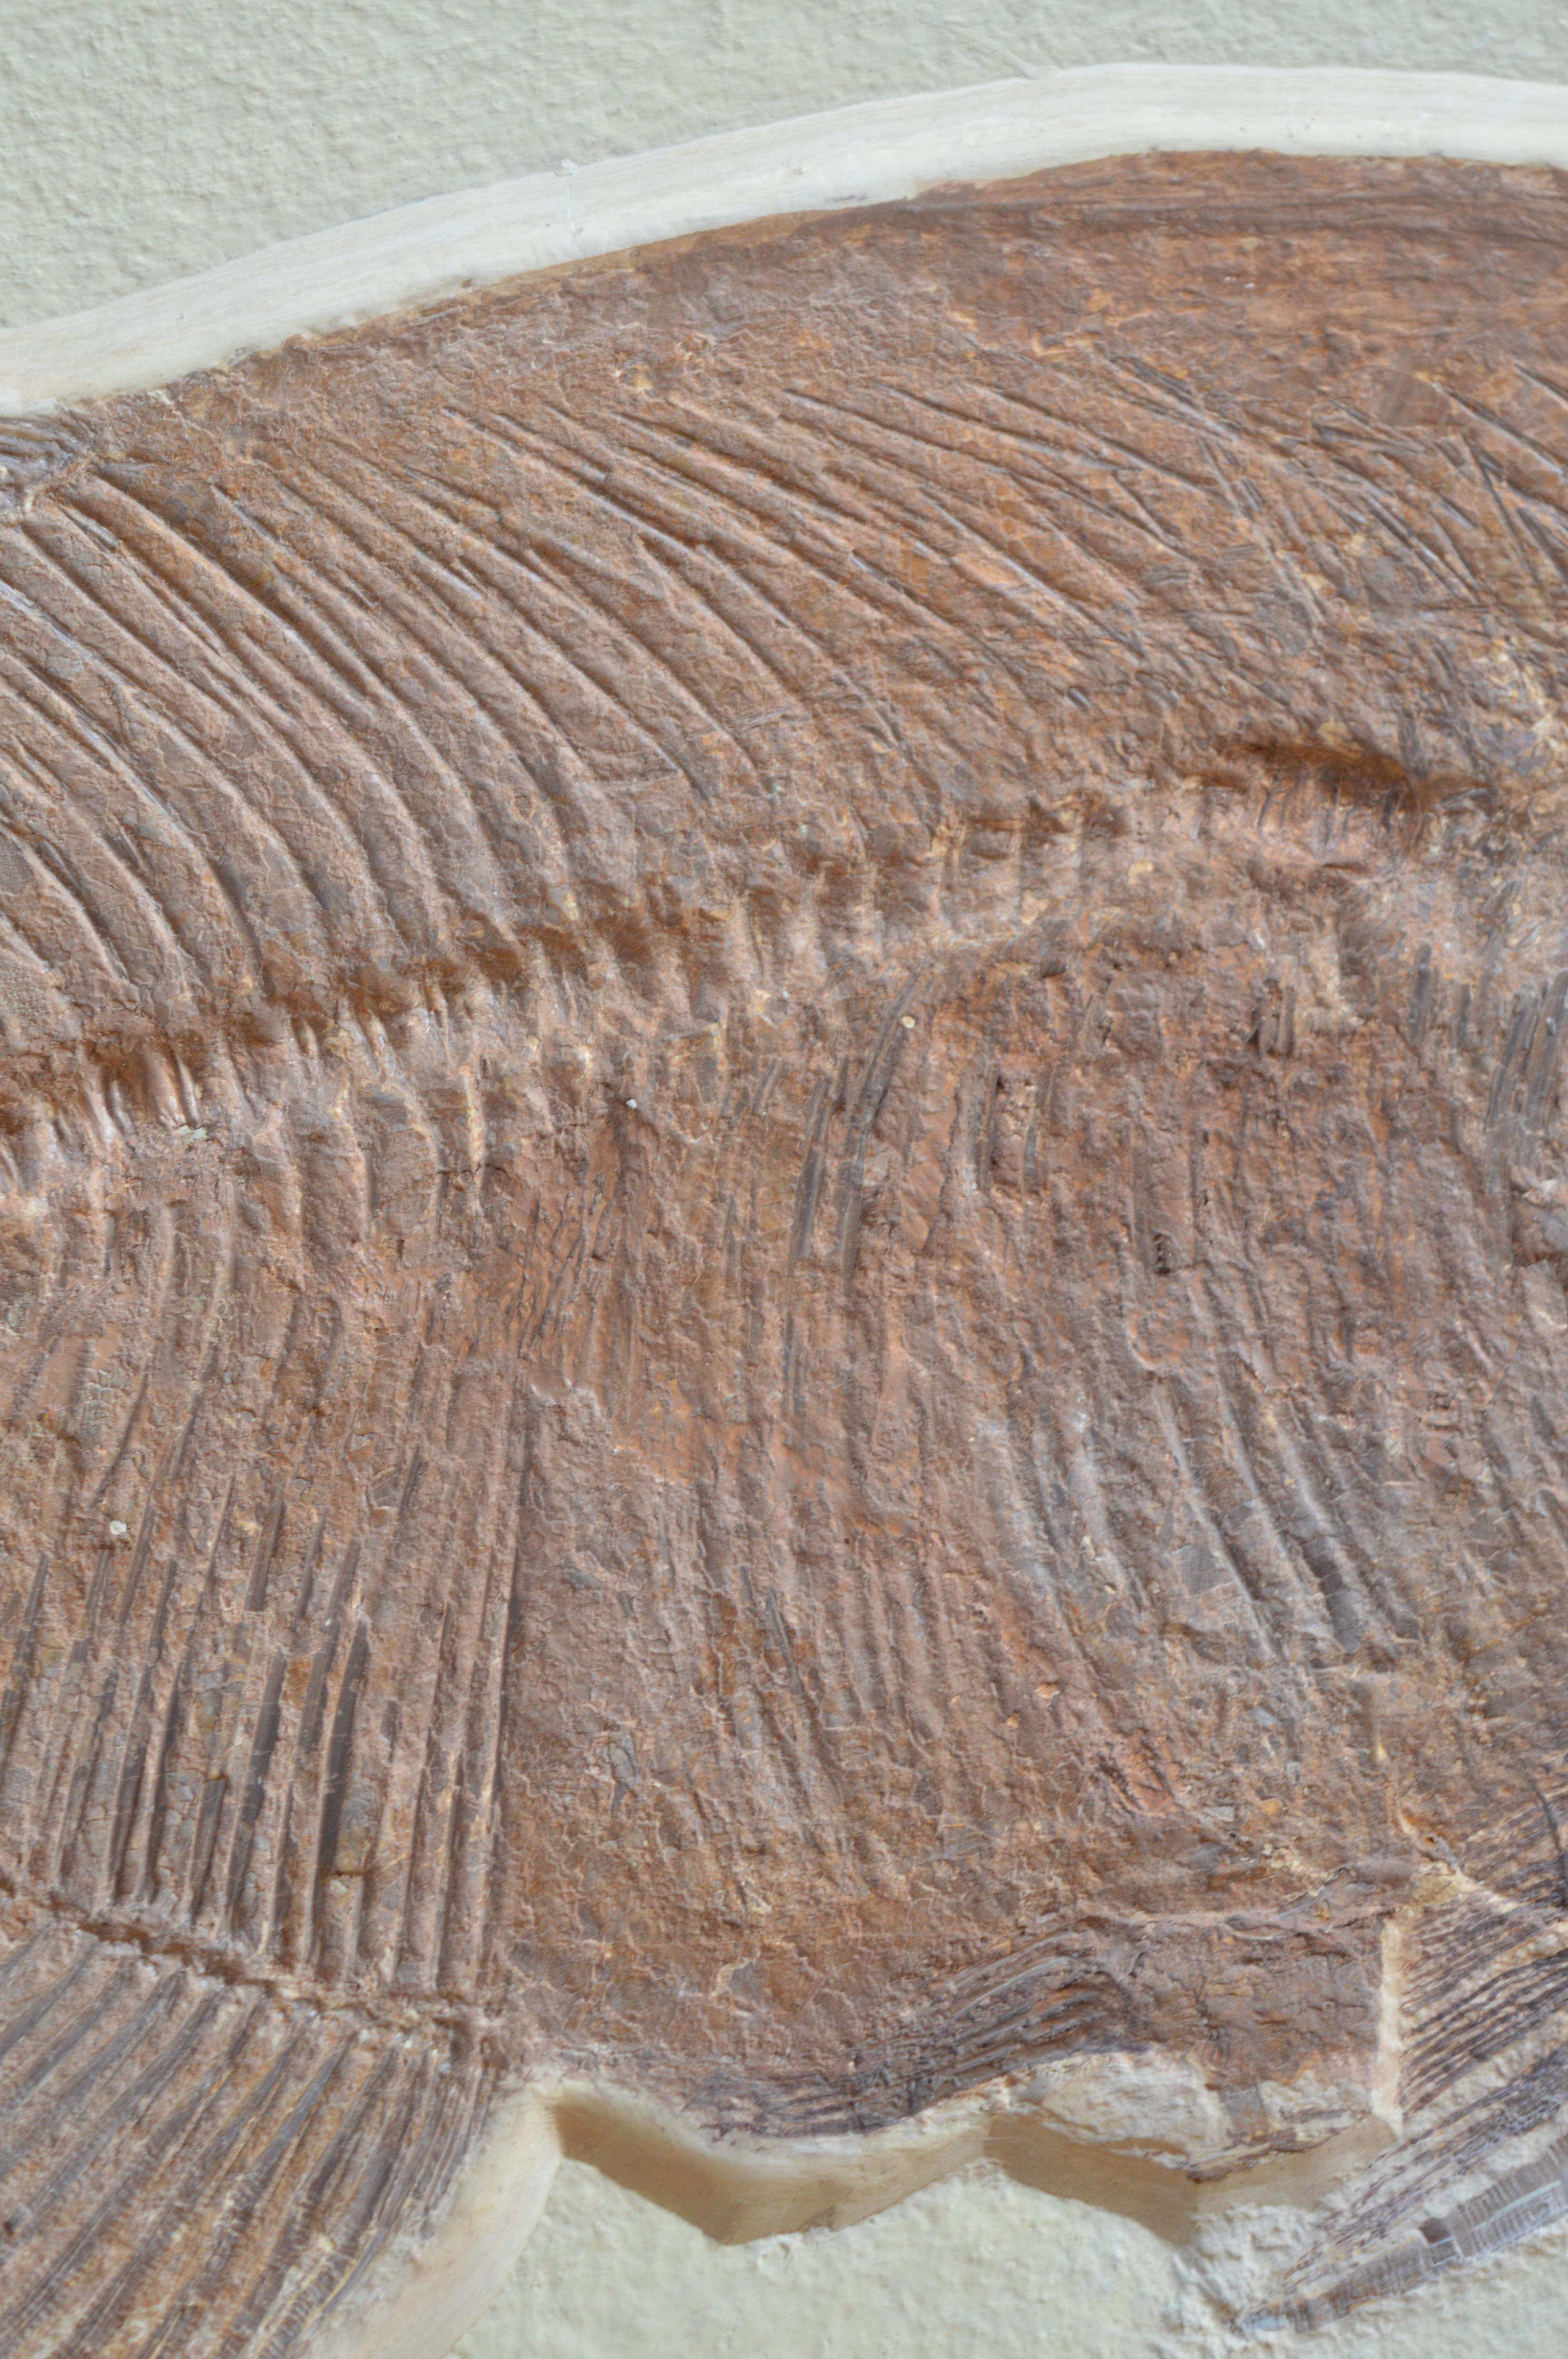 Phareodus Fish Fossil from Eocene Era on Limestone 1